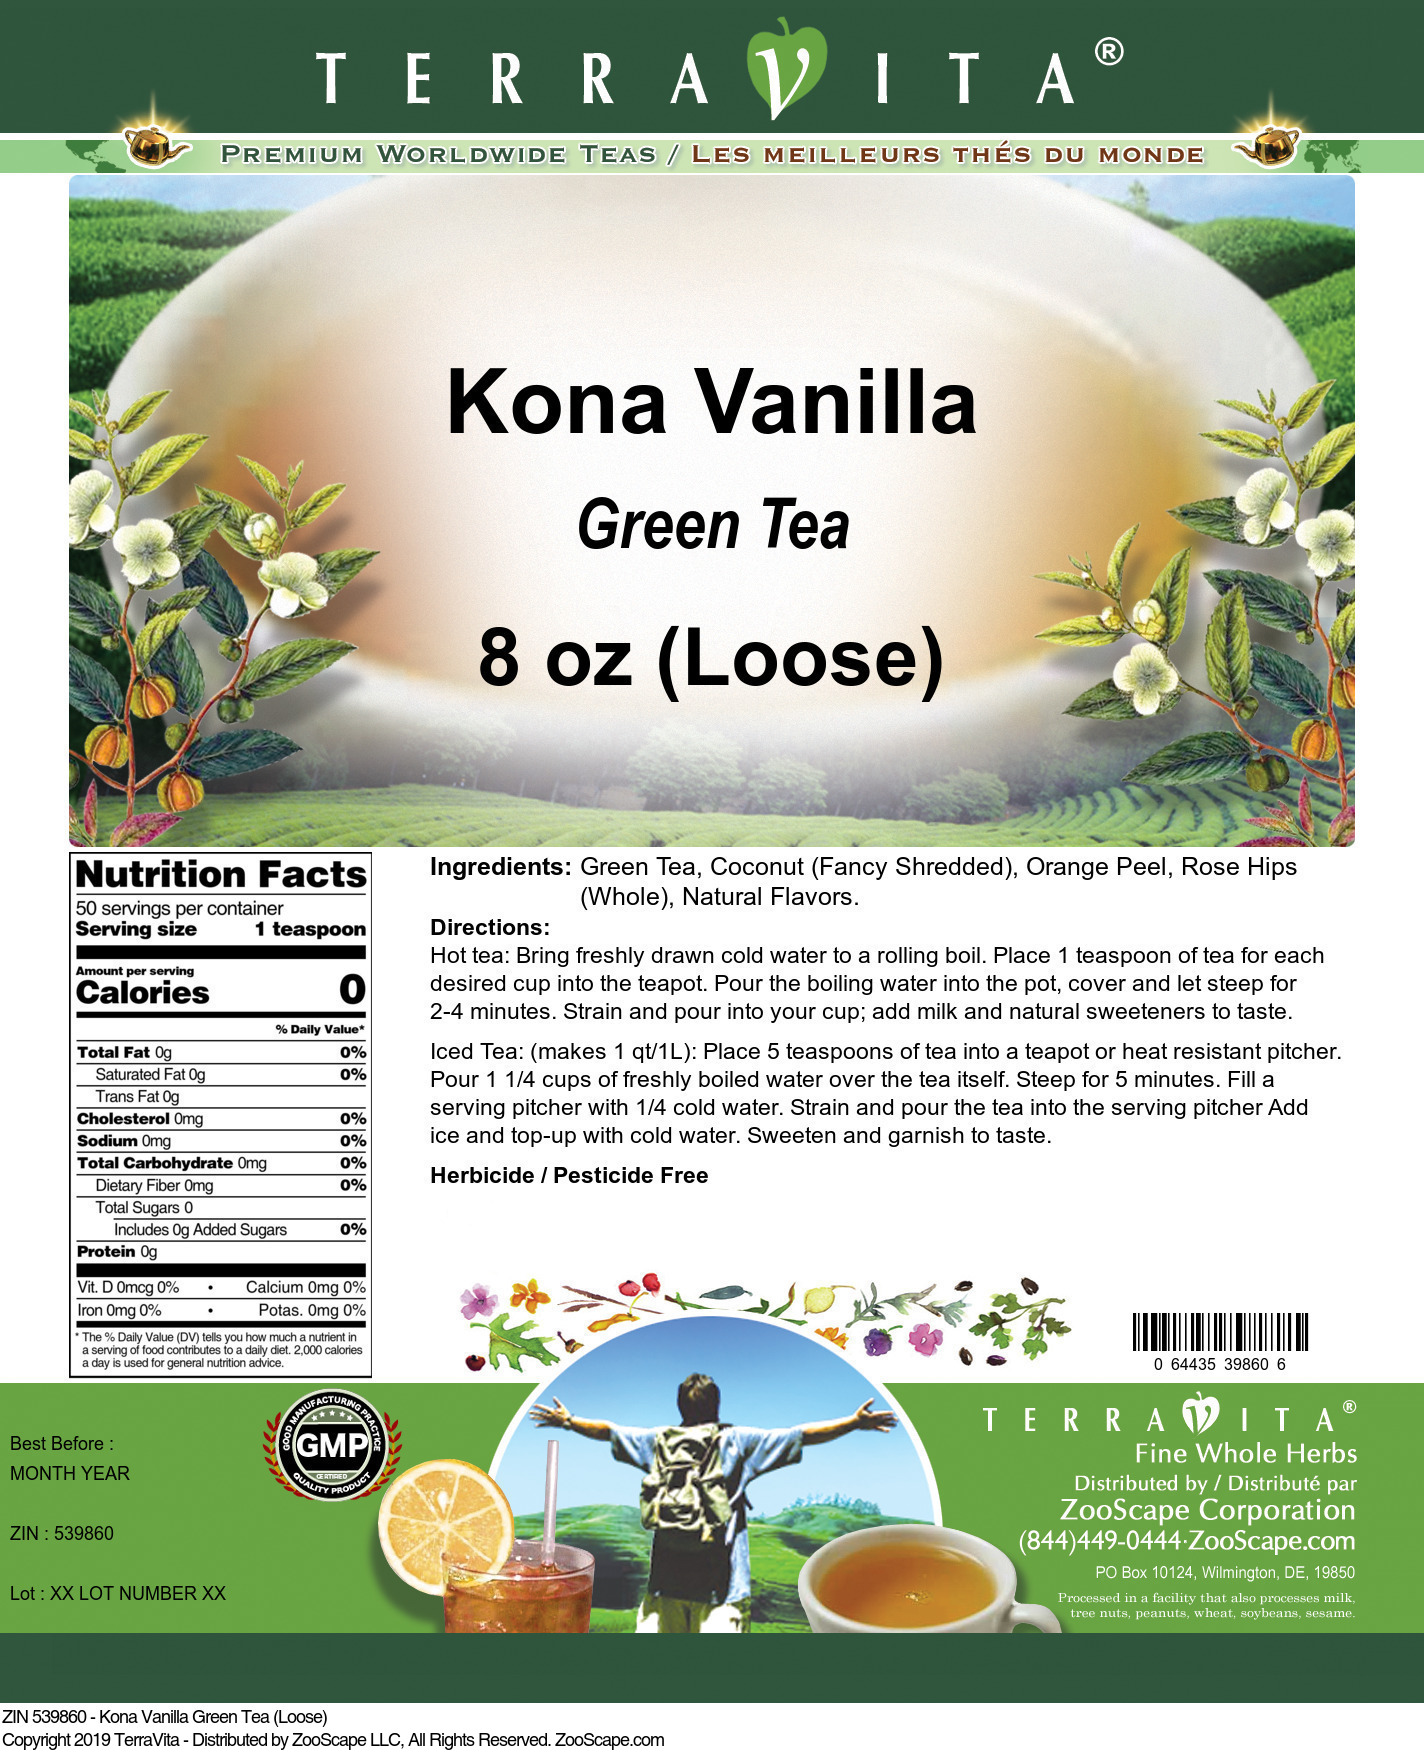 Kona Vanilla Green Tea (Loose) - Label